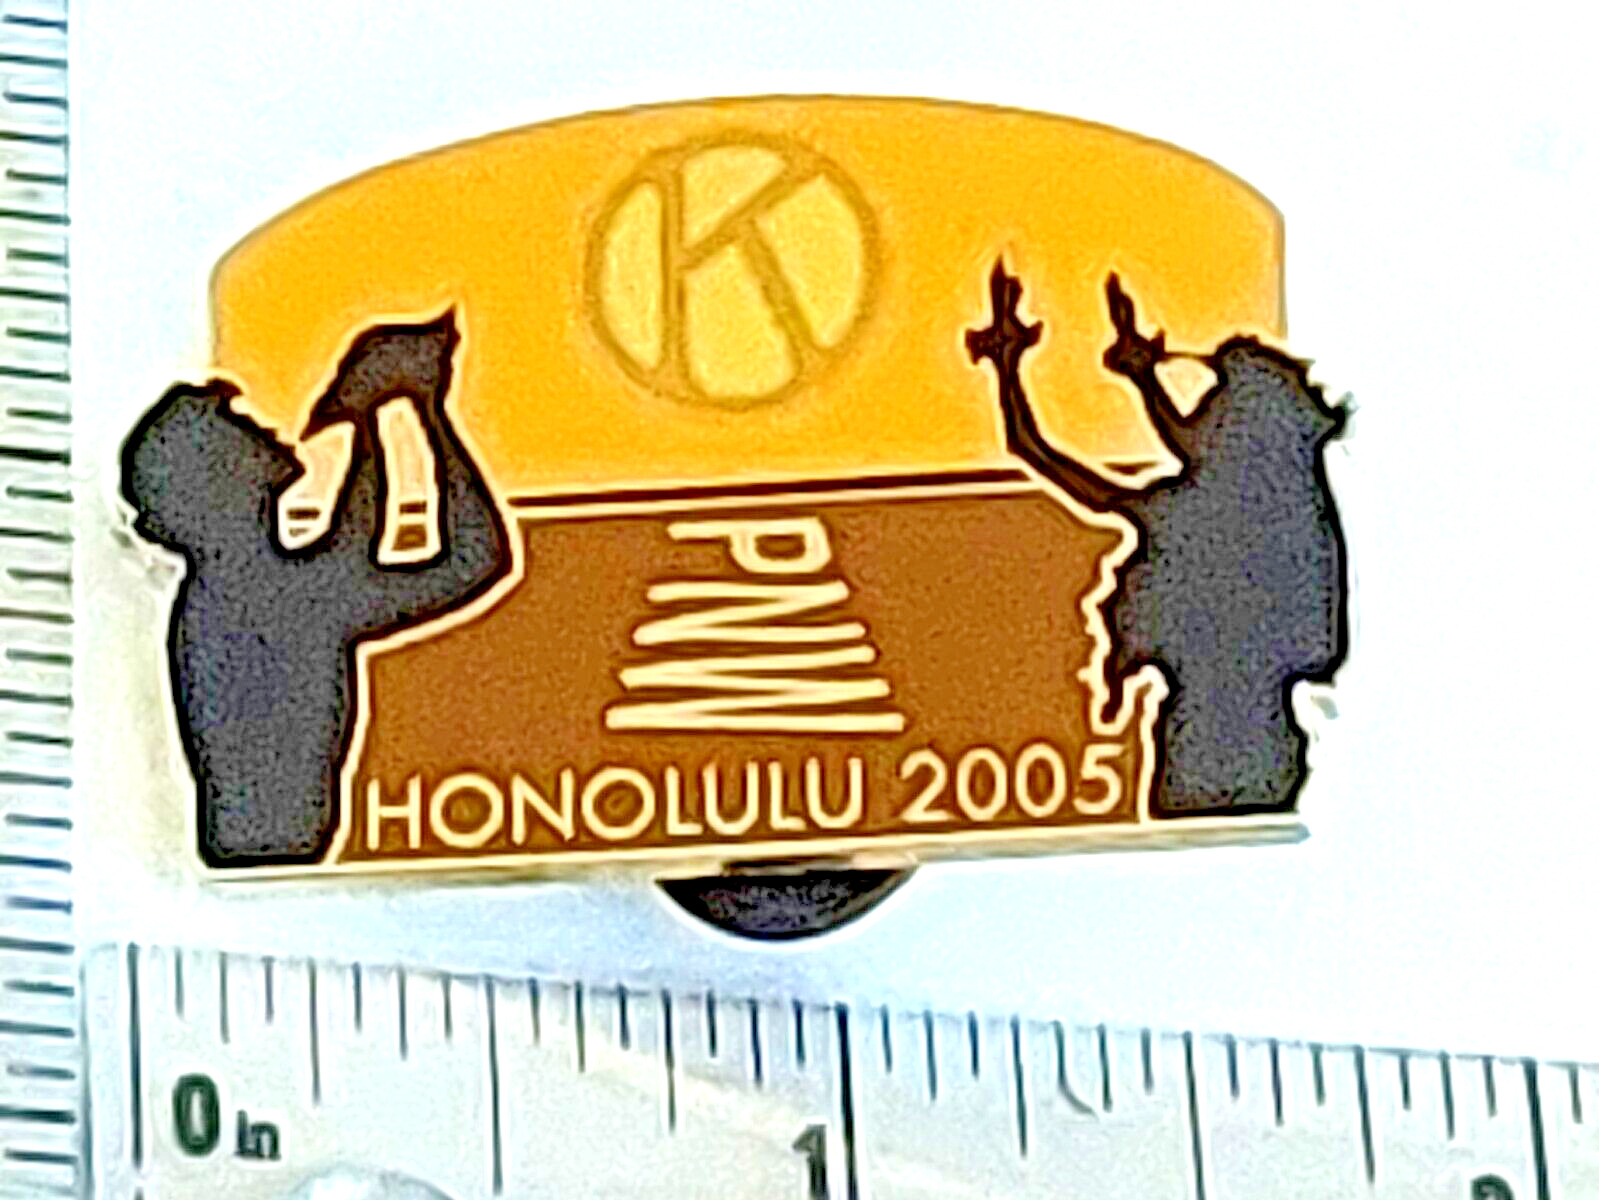 Kiwanis International Pacific Northwest 2005 Honolulu Lapel Pin (041523)